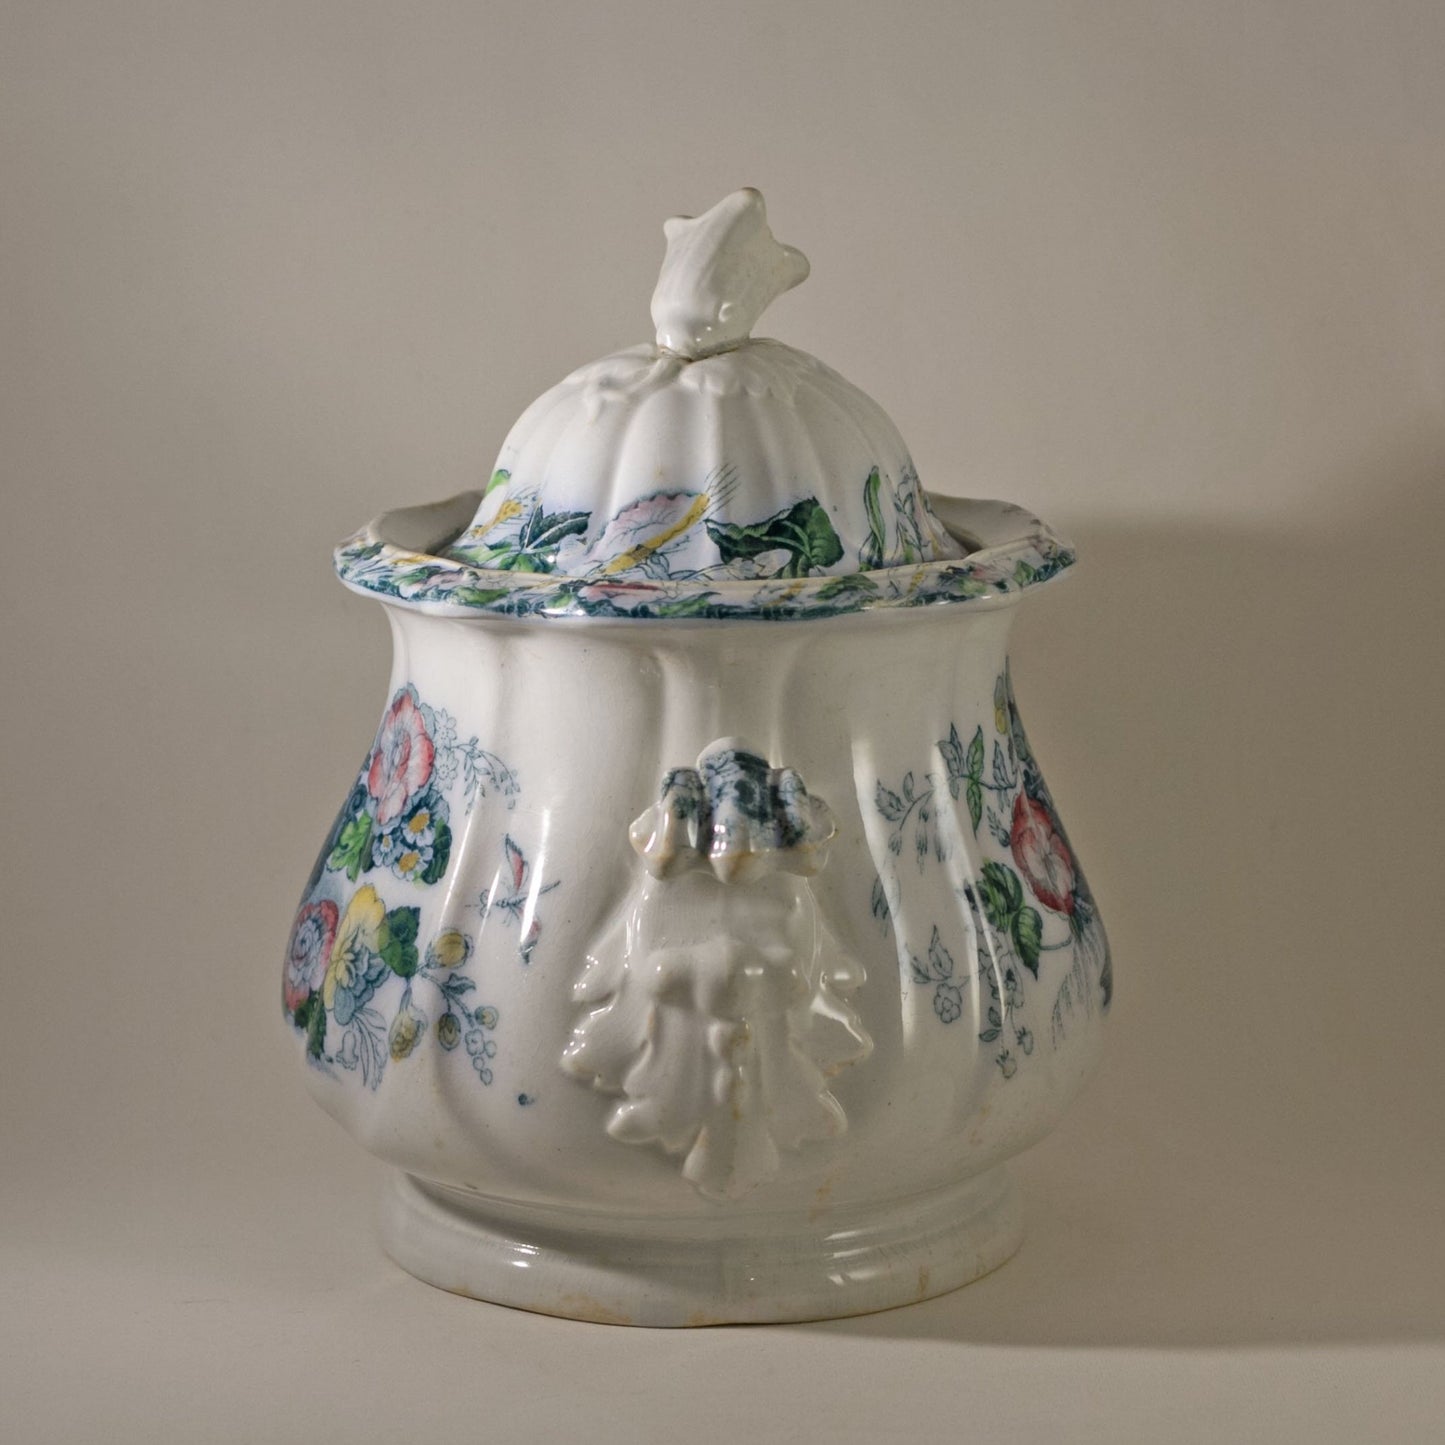 JACOB FURNIVAL IRONSTONE Covered Sugar Bowl or Utility Jar Circa 1850